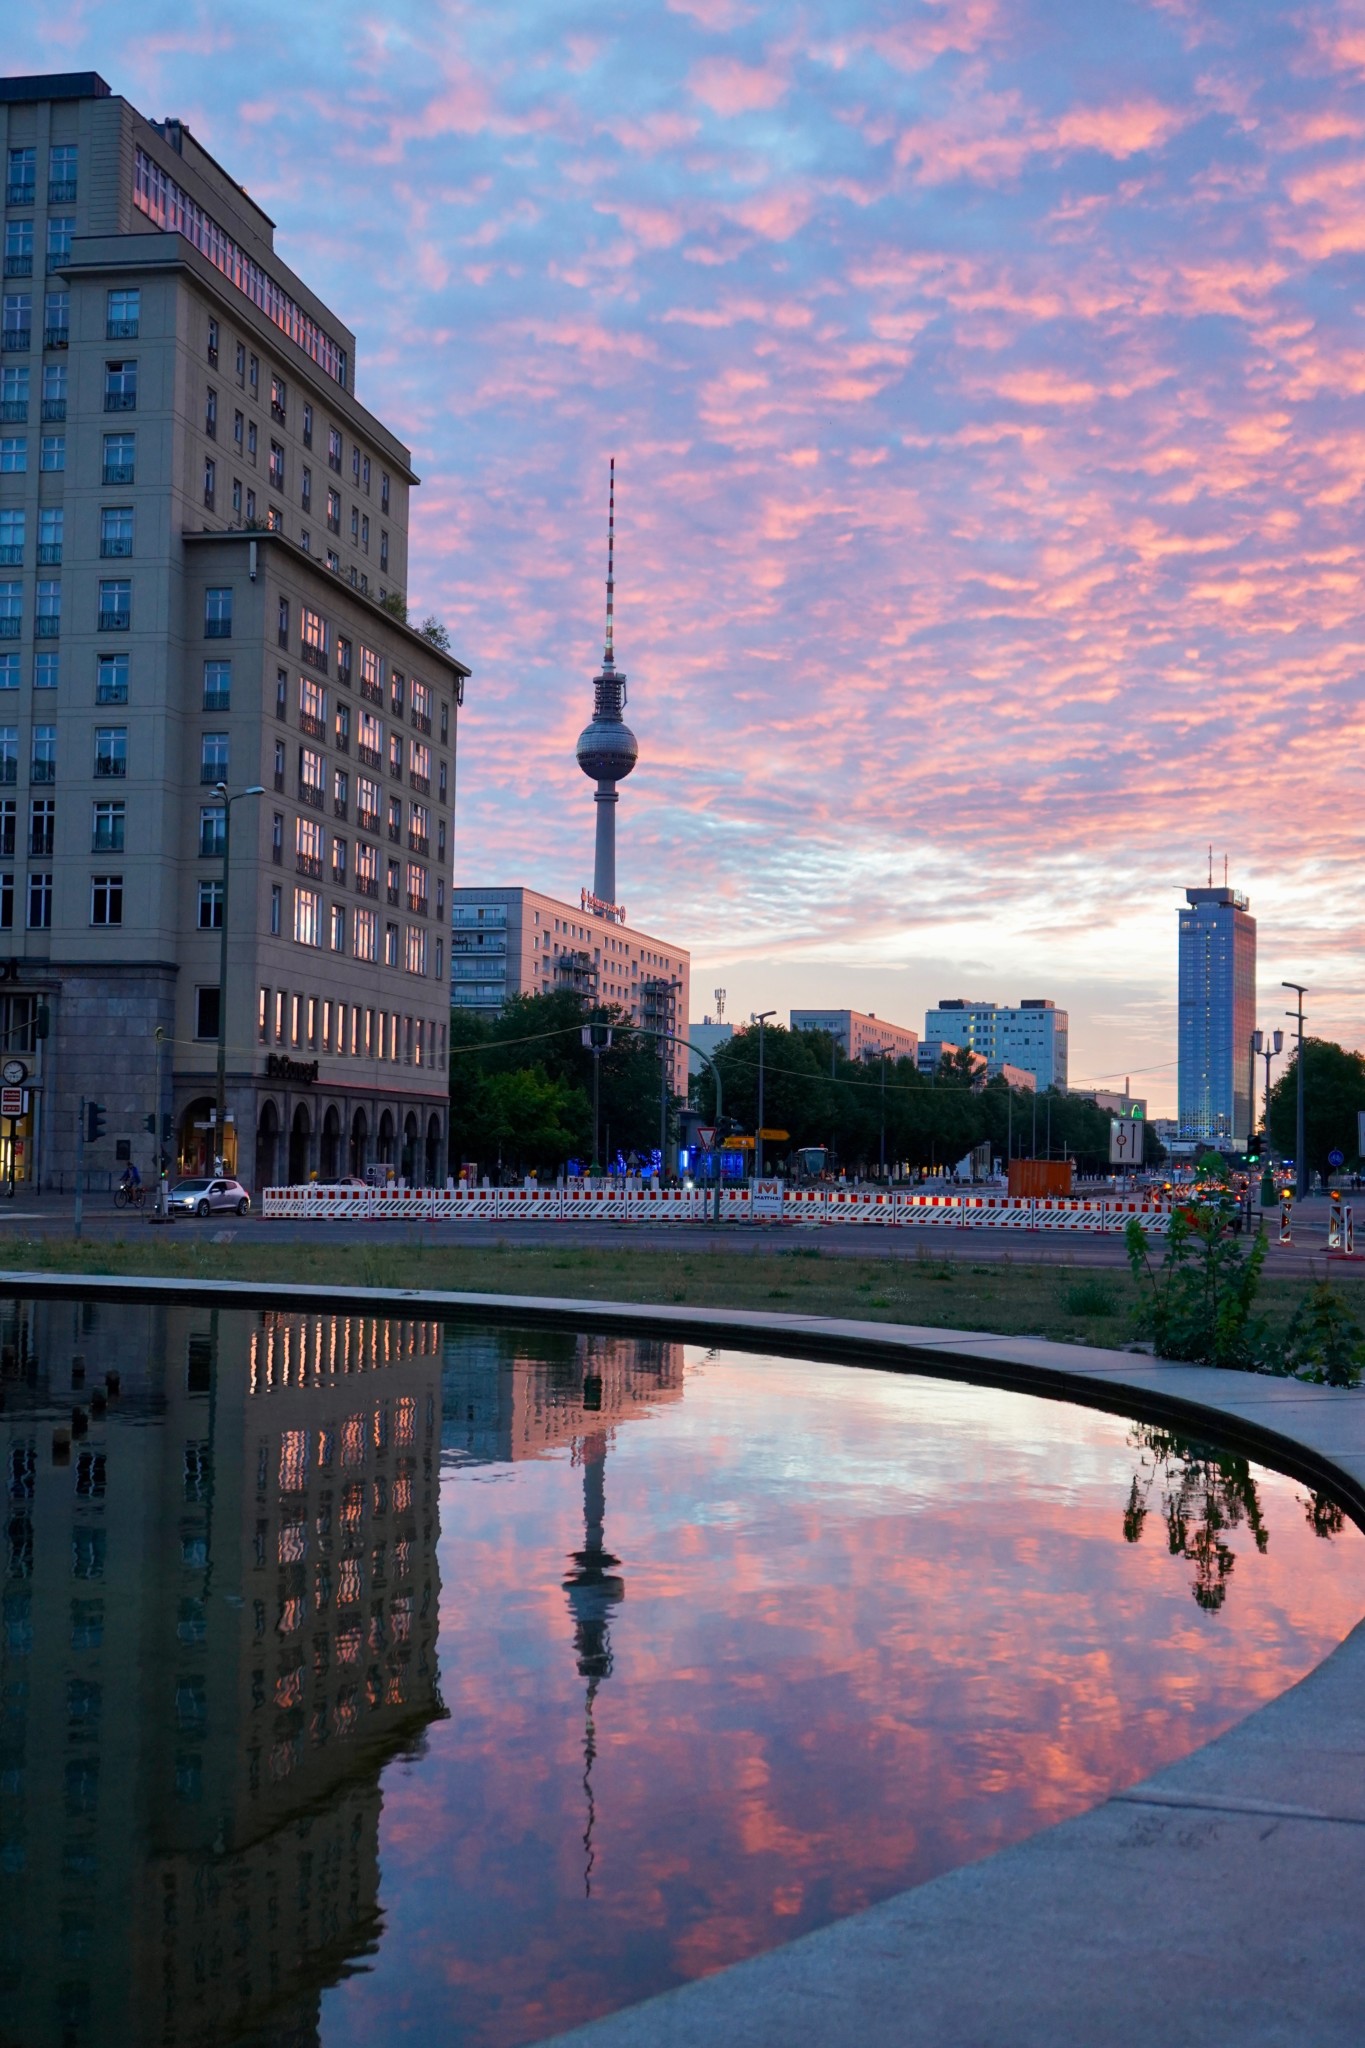 Sonnenuntergang in Berlin mit Blick auf den Fernsehturm